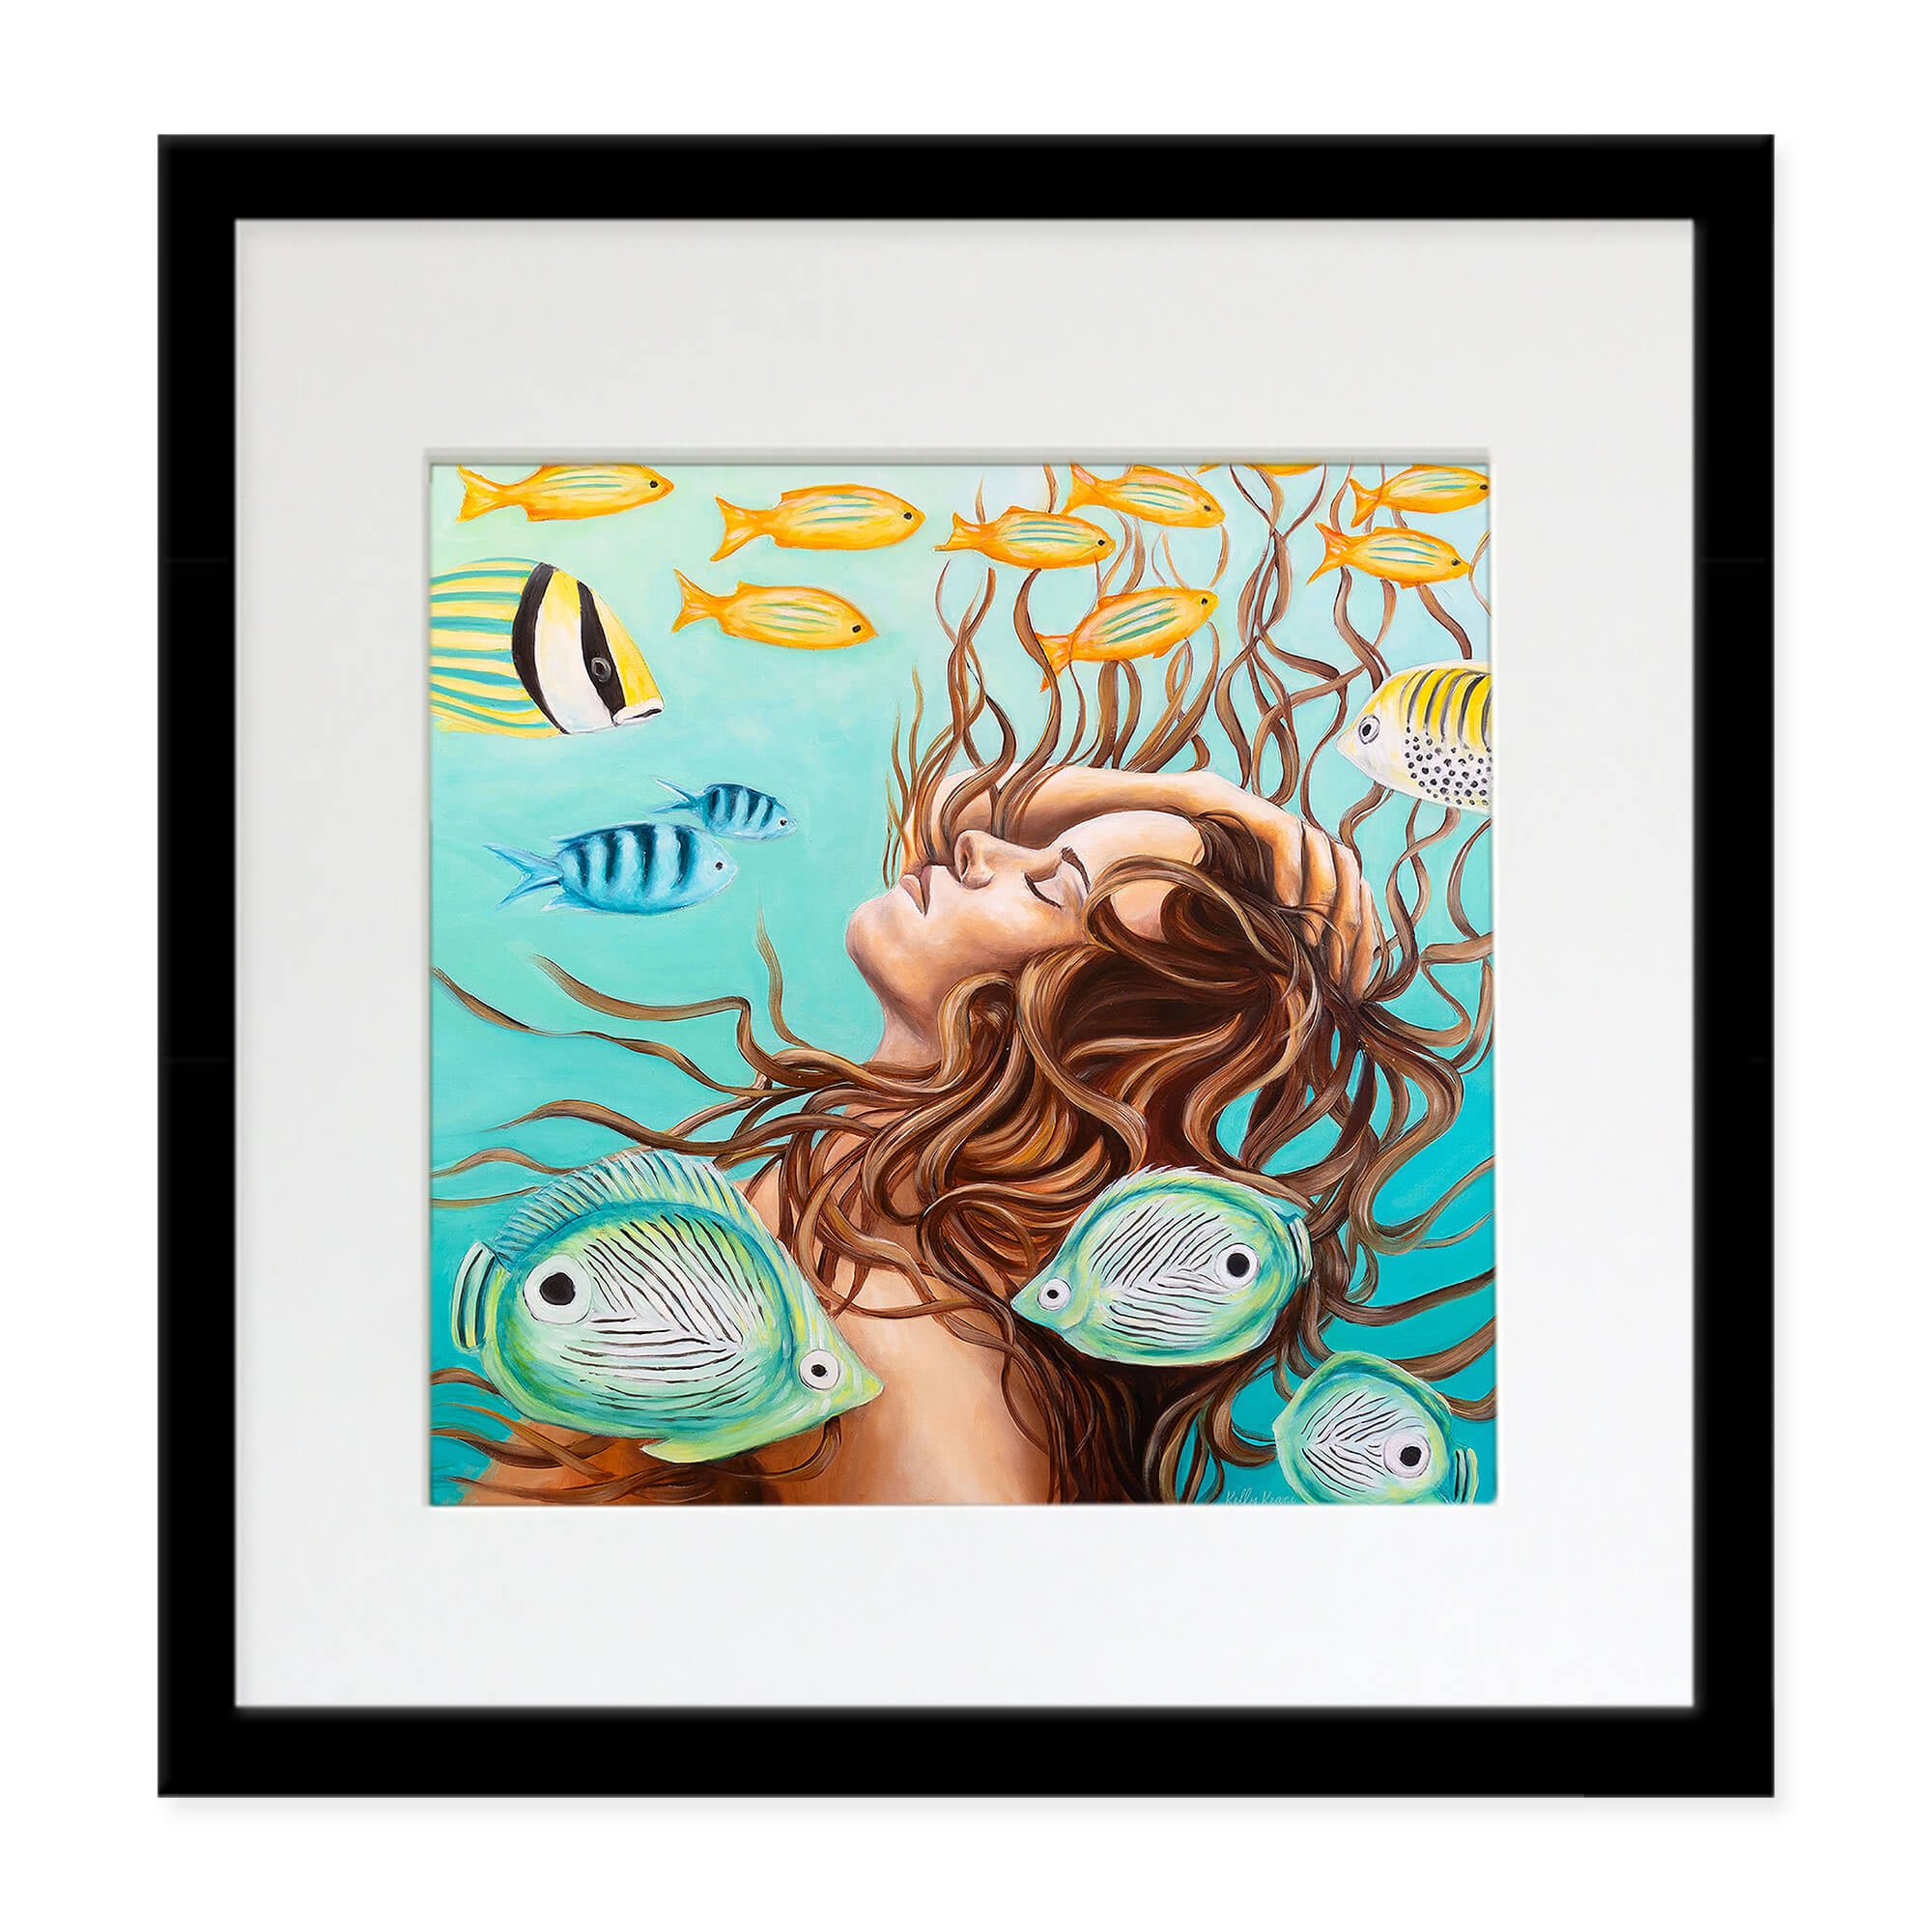 Matted art print of a beautiful woman underwater by Hawaii artist Kelly Keane